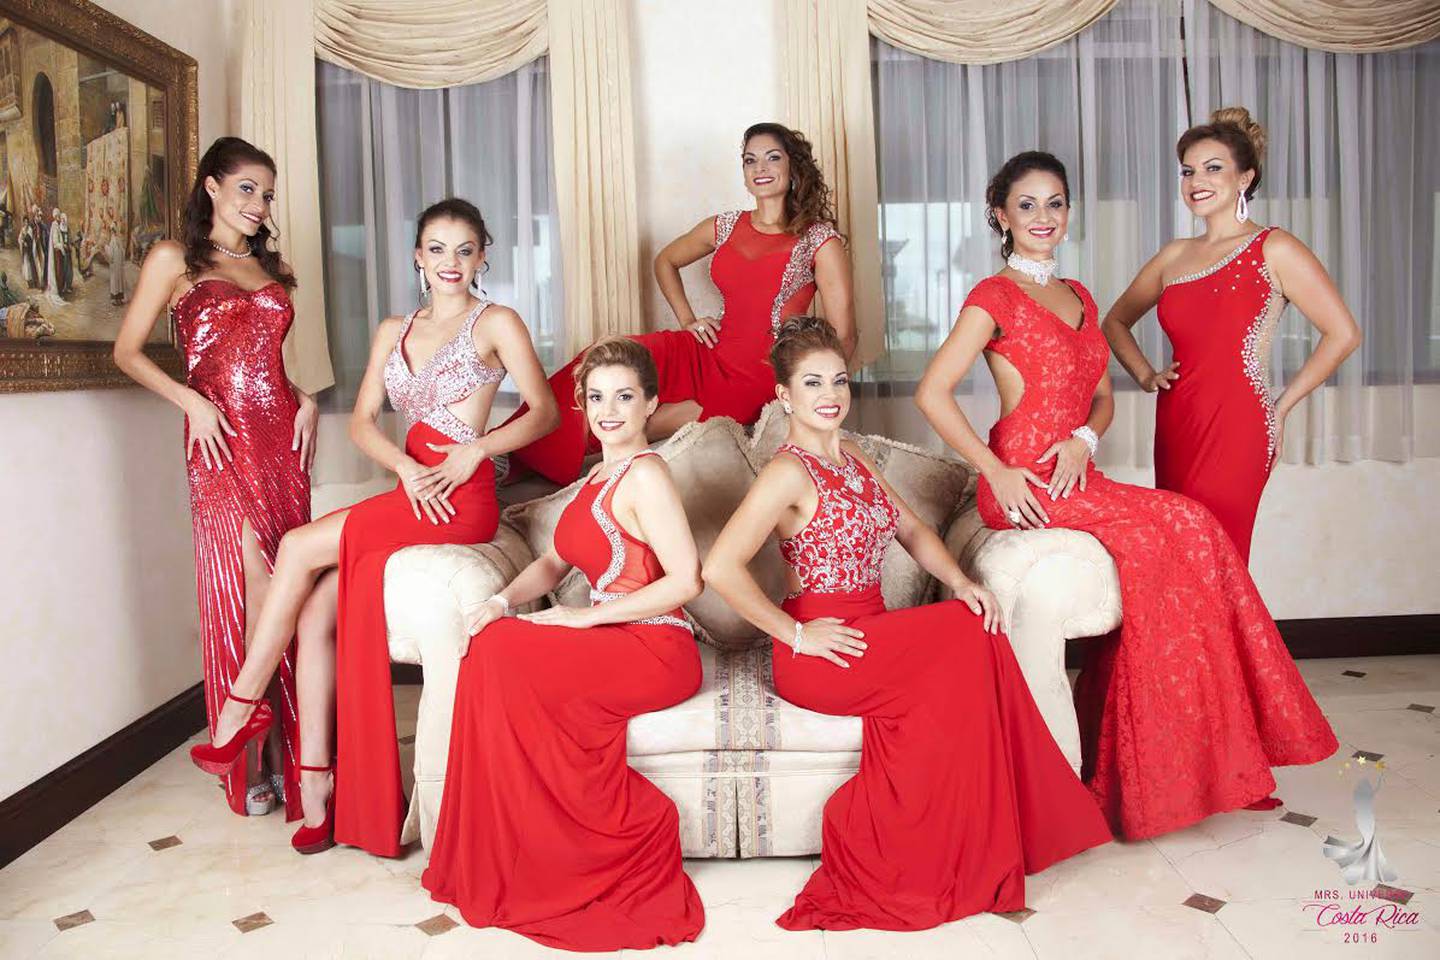 Concurso Mrs Universe Costa Rica elegirá a su segunda reina este 21 de